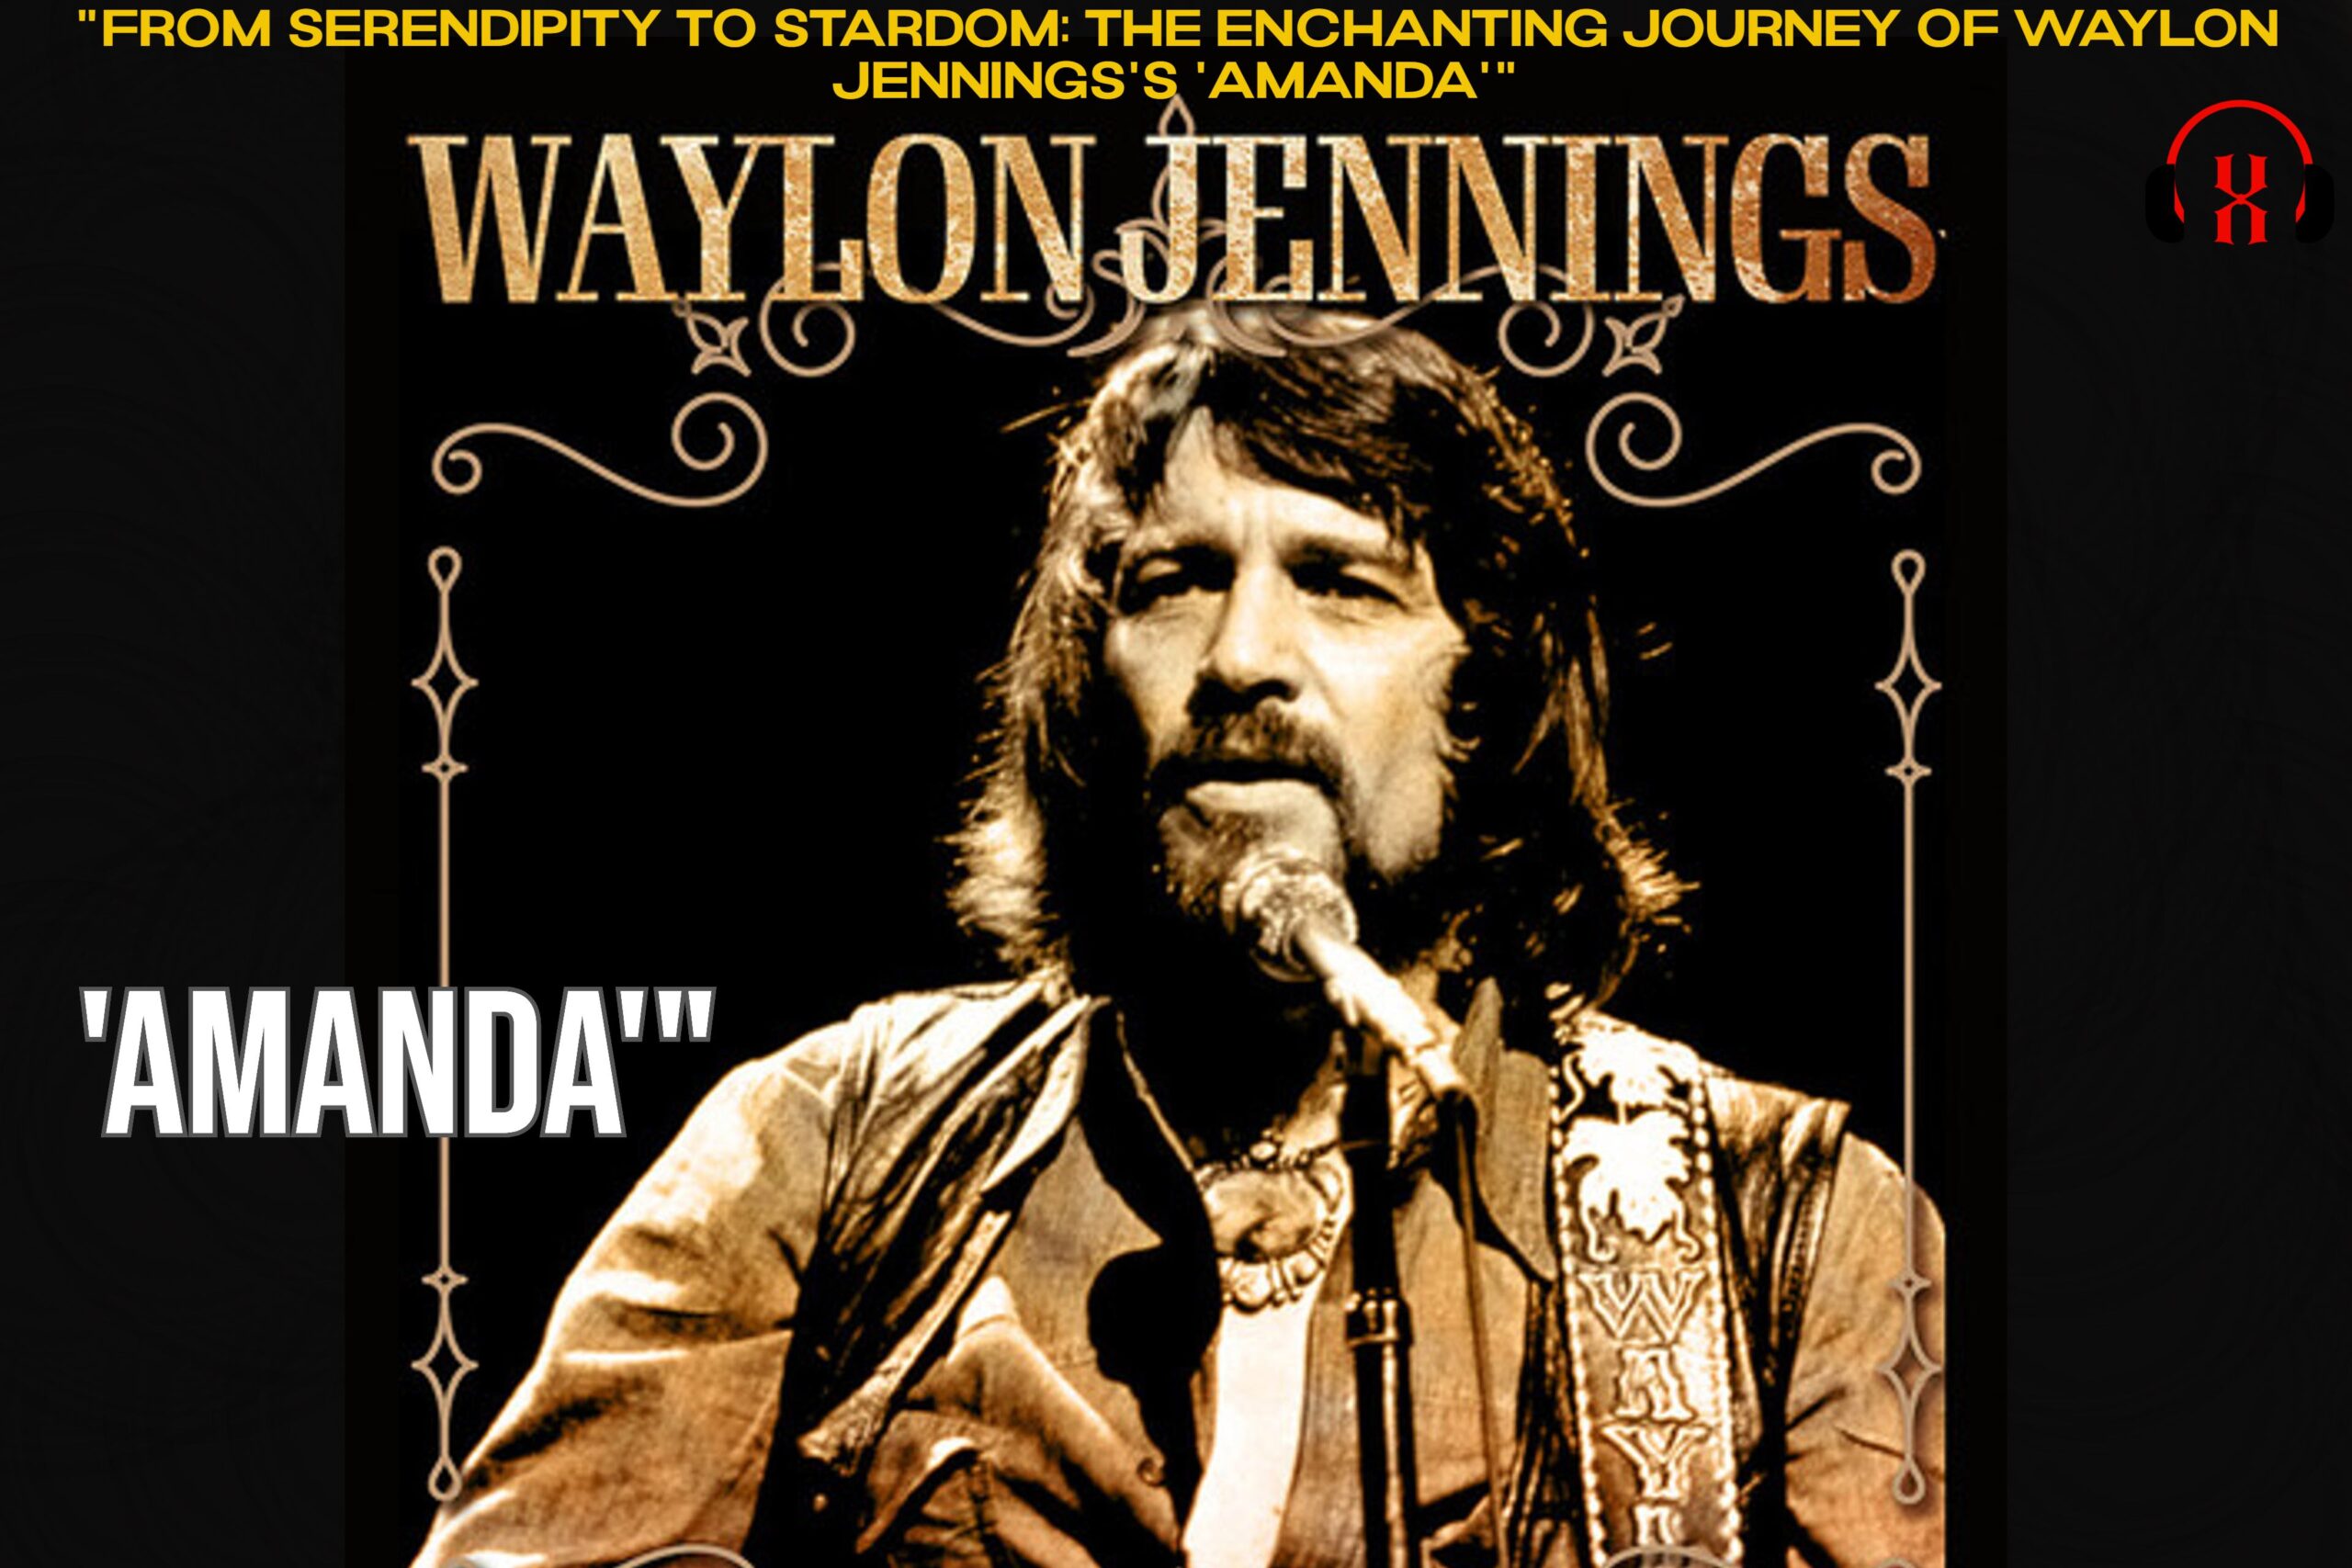 “From Serendipity to Stardom: The Enchanting Journey of Waylon Jennings’s ‘Amanda'”